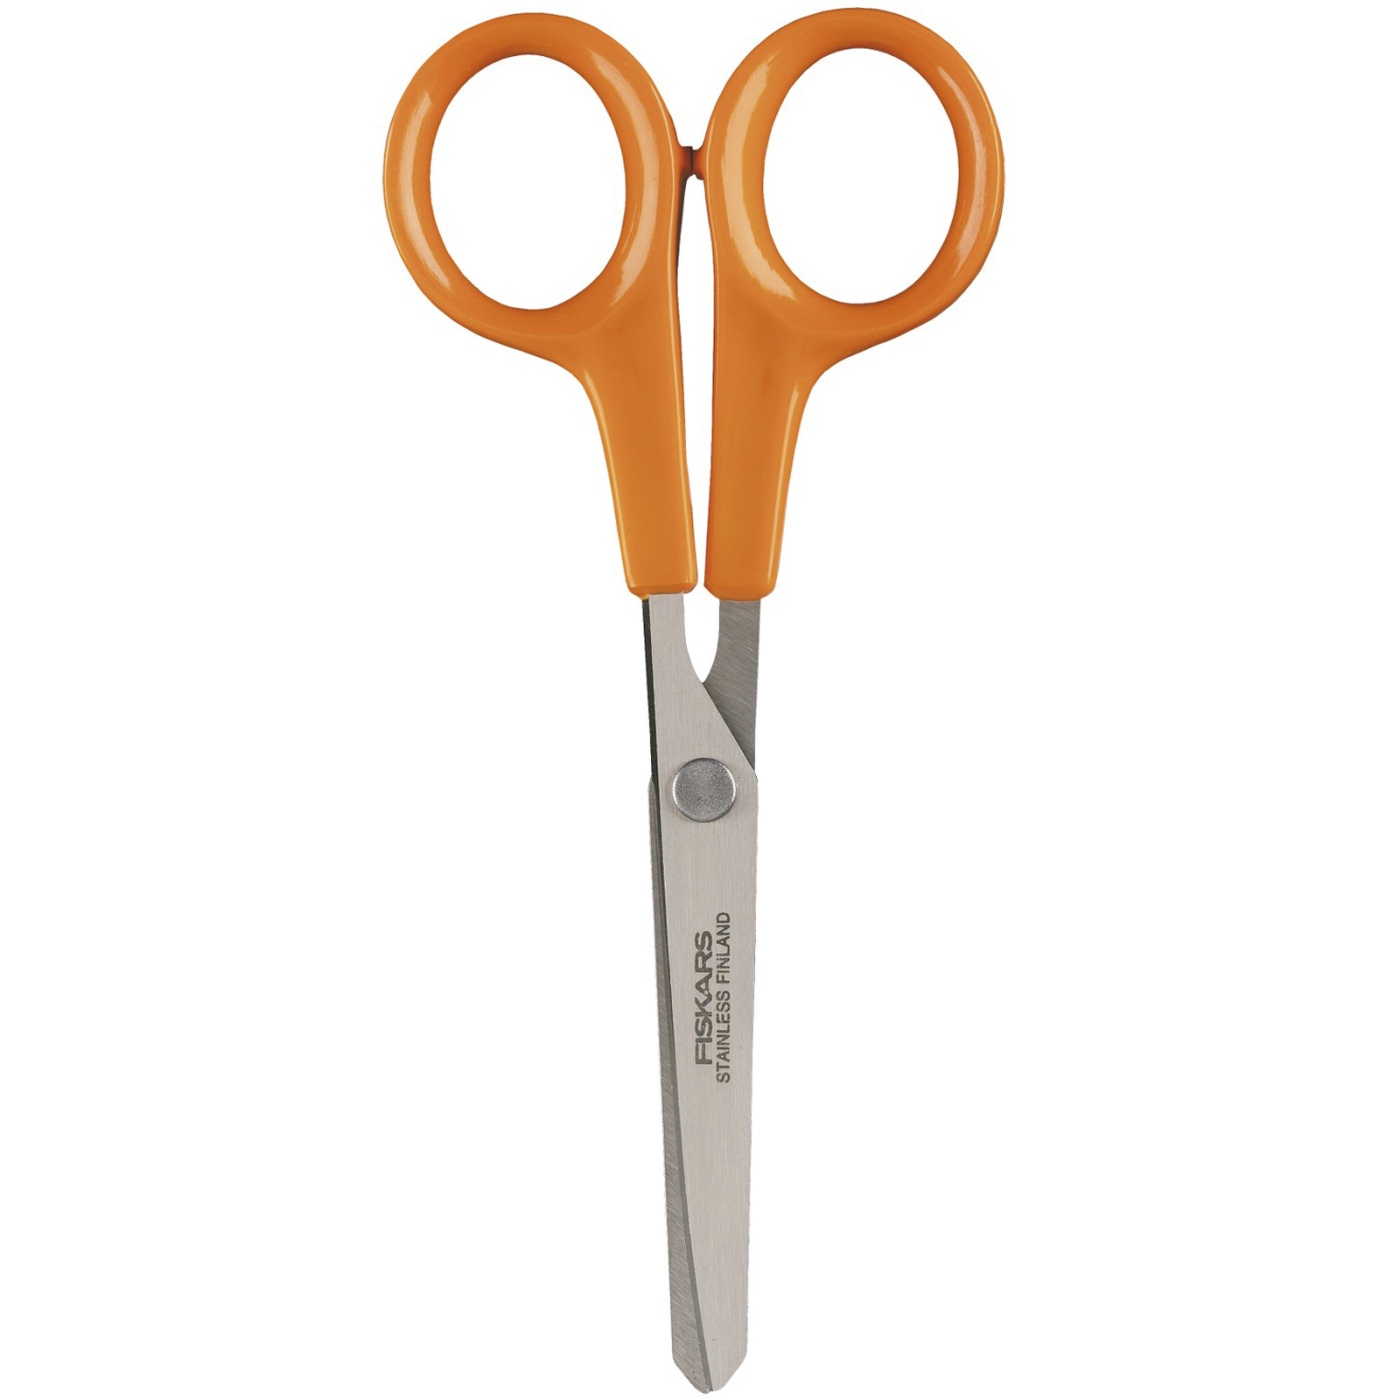 Fiskars Classic - Blunt tip Scissors - 13 cm